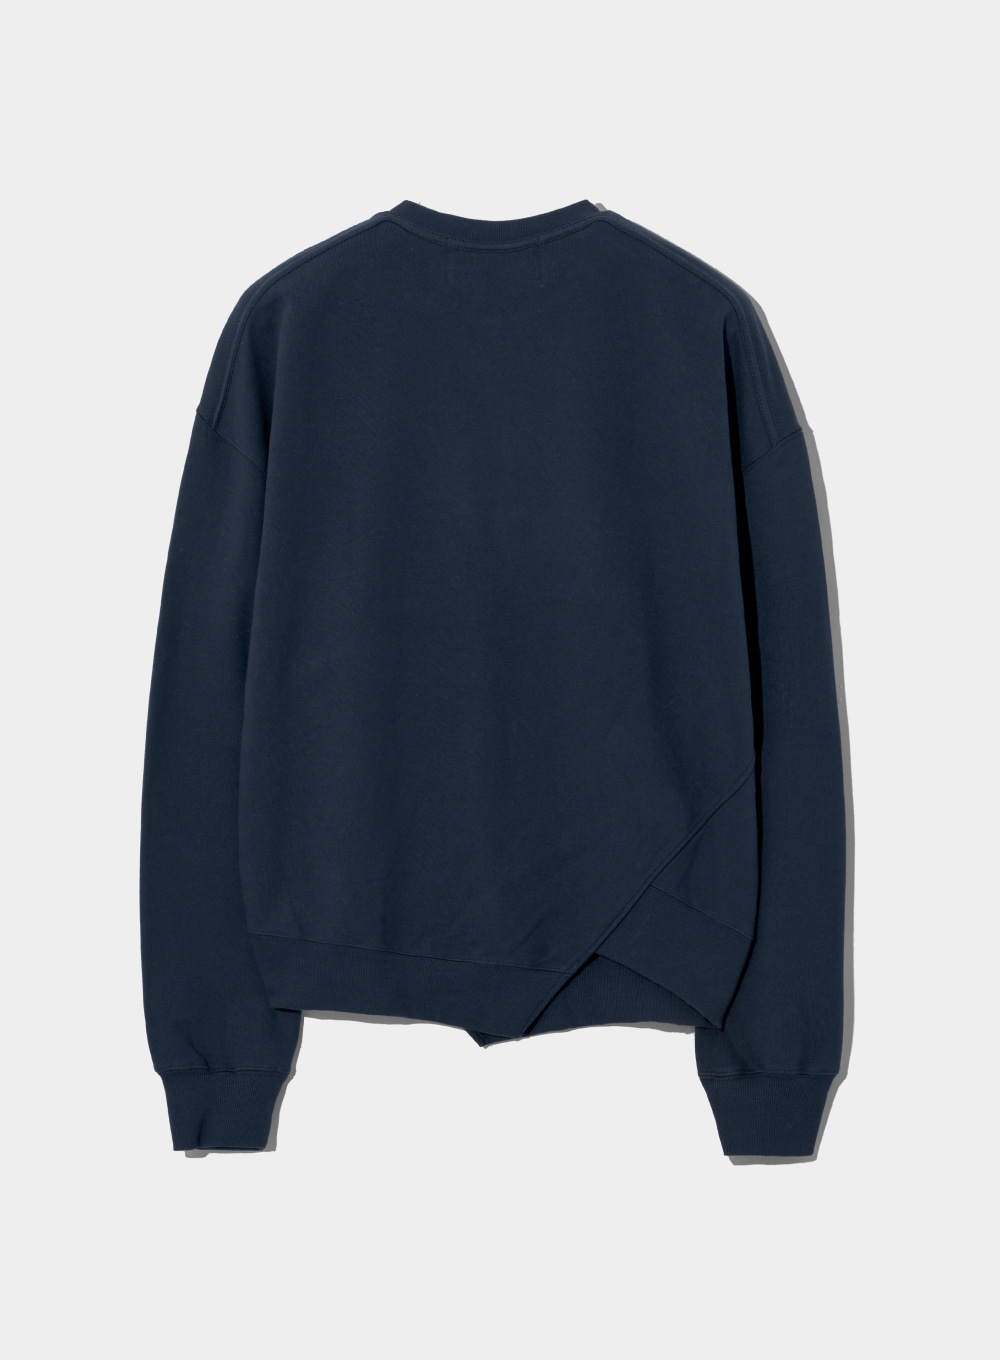 Dublin Unbalanced Chain Embroidery Sweatshirts - Bespoke Navy